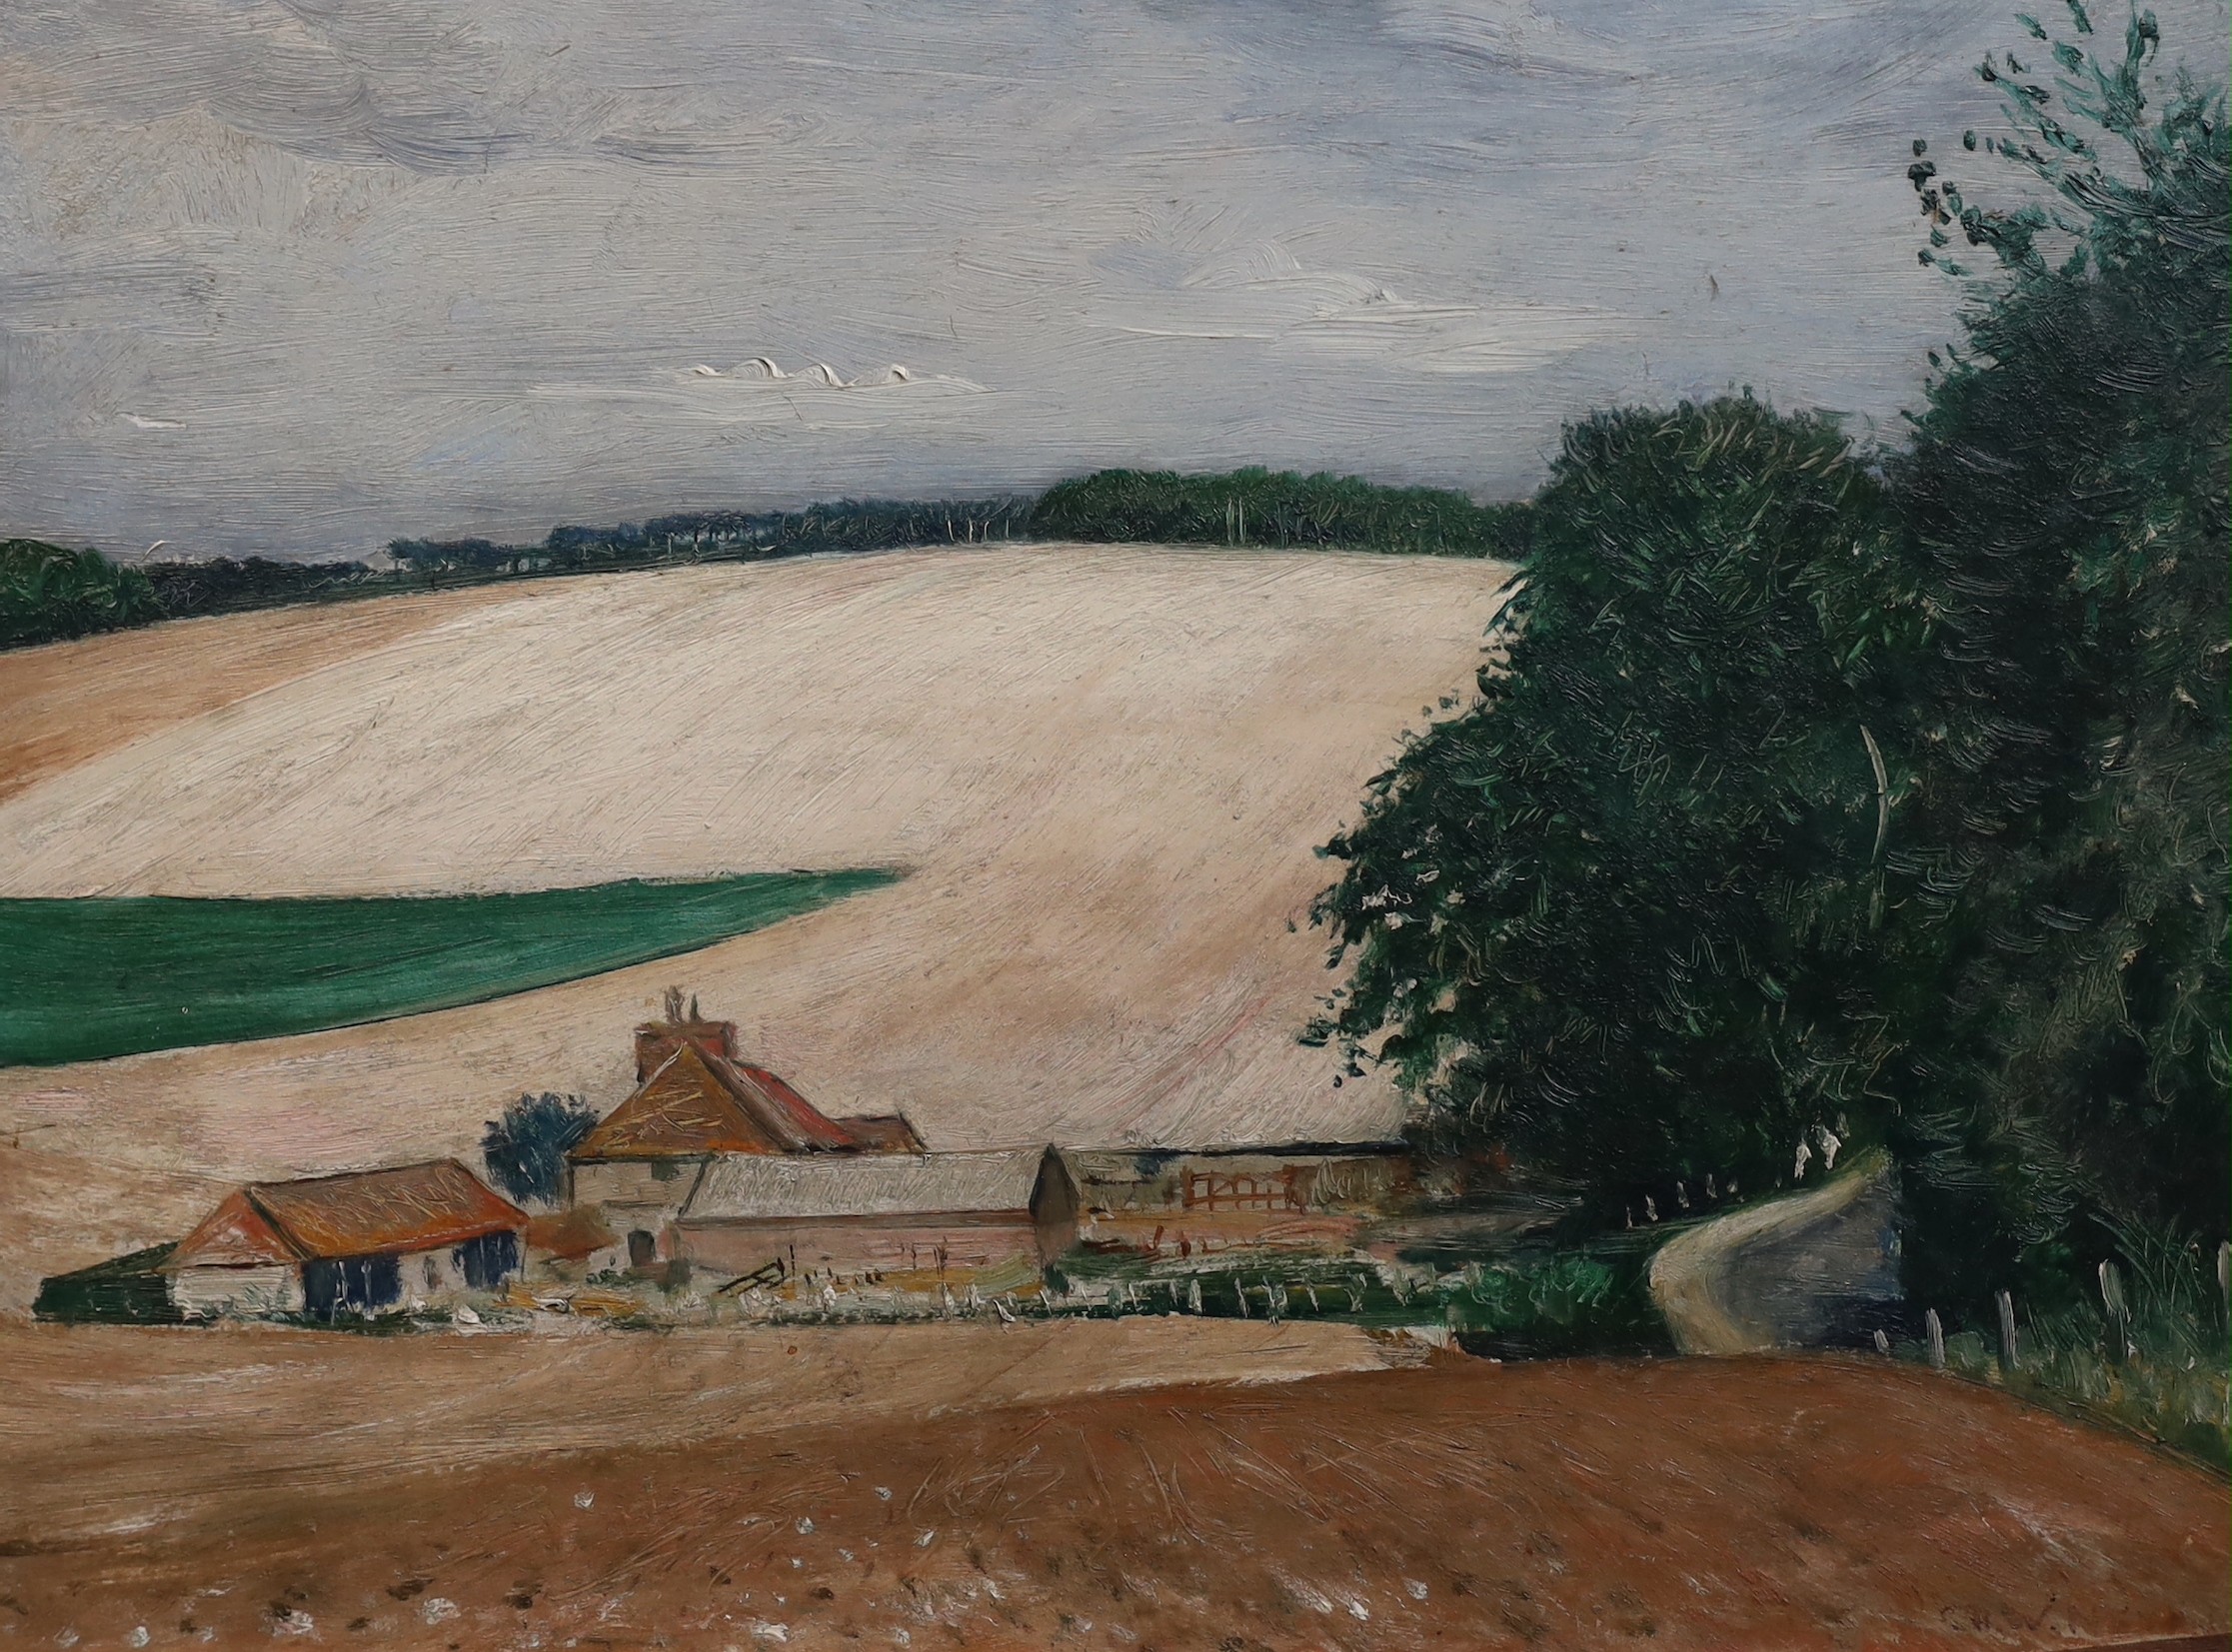 Christopher Richard Wynne Nevinson A.R.A. (British, 1889-1946), Farm in a landscape, oil on wooden panel, 30 x 40cm